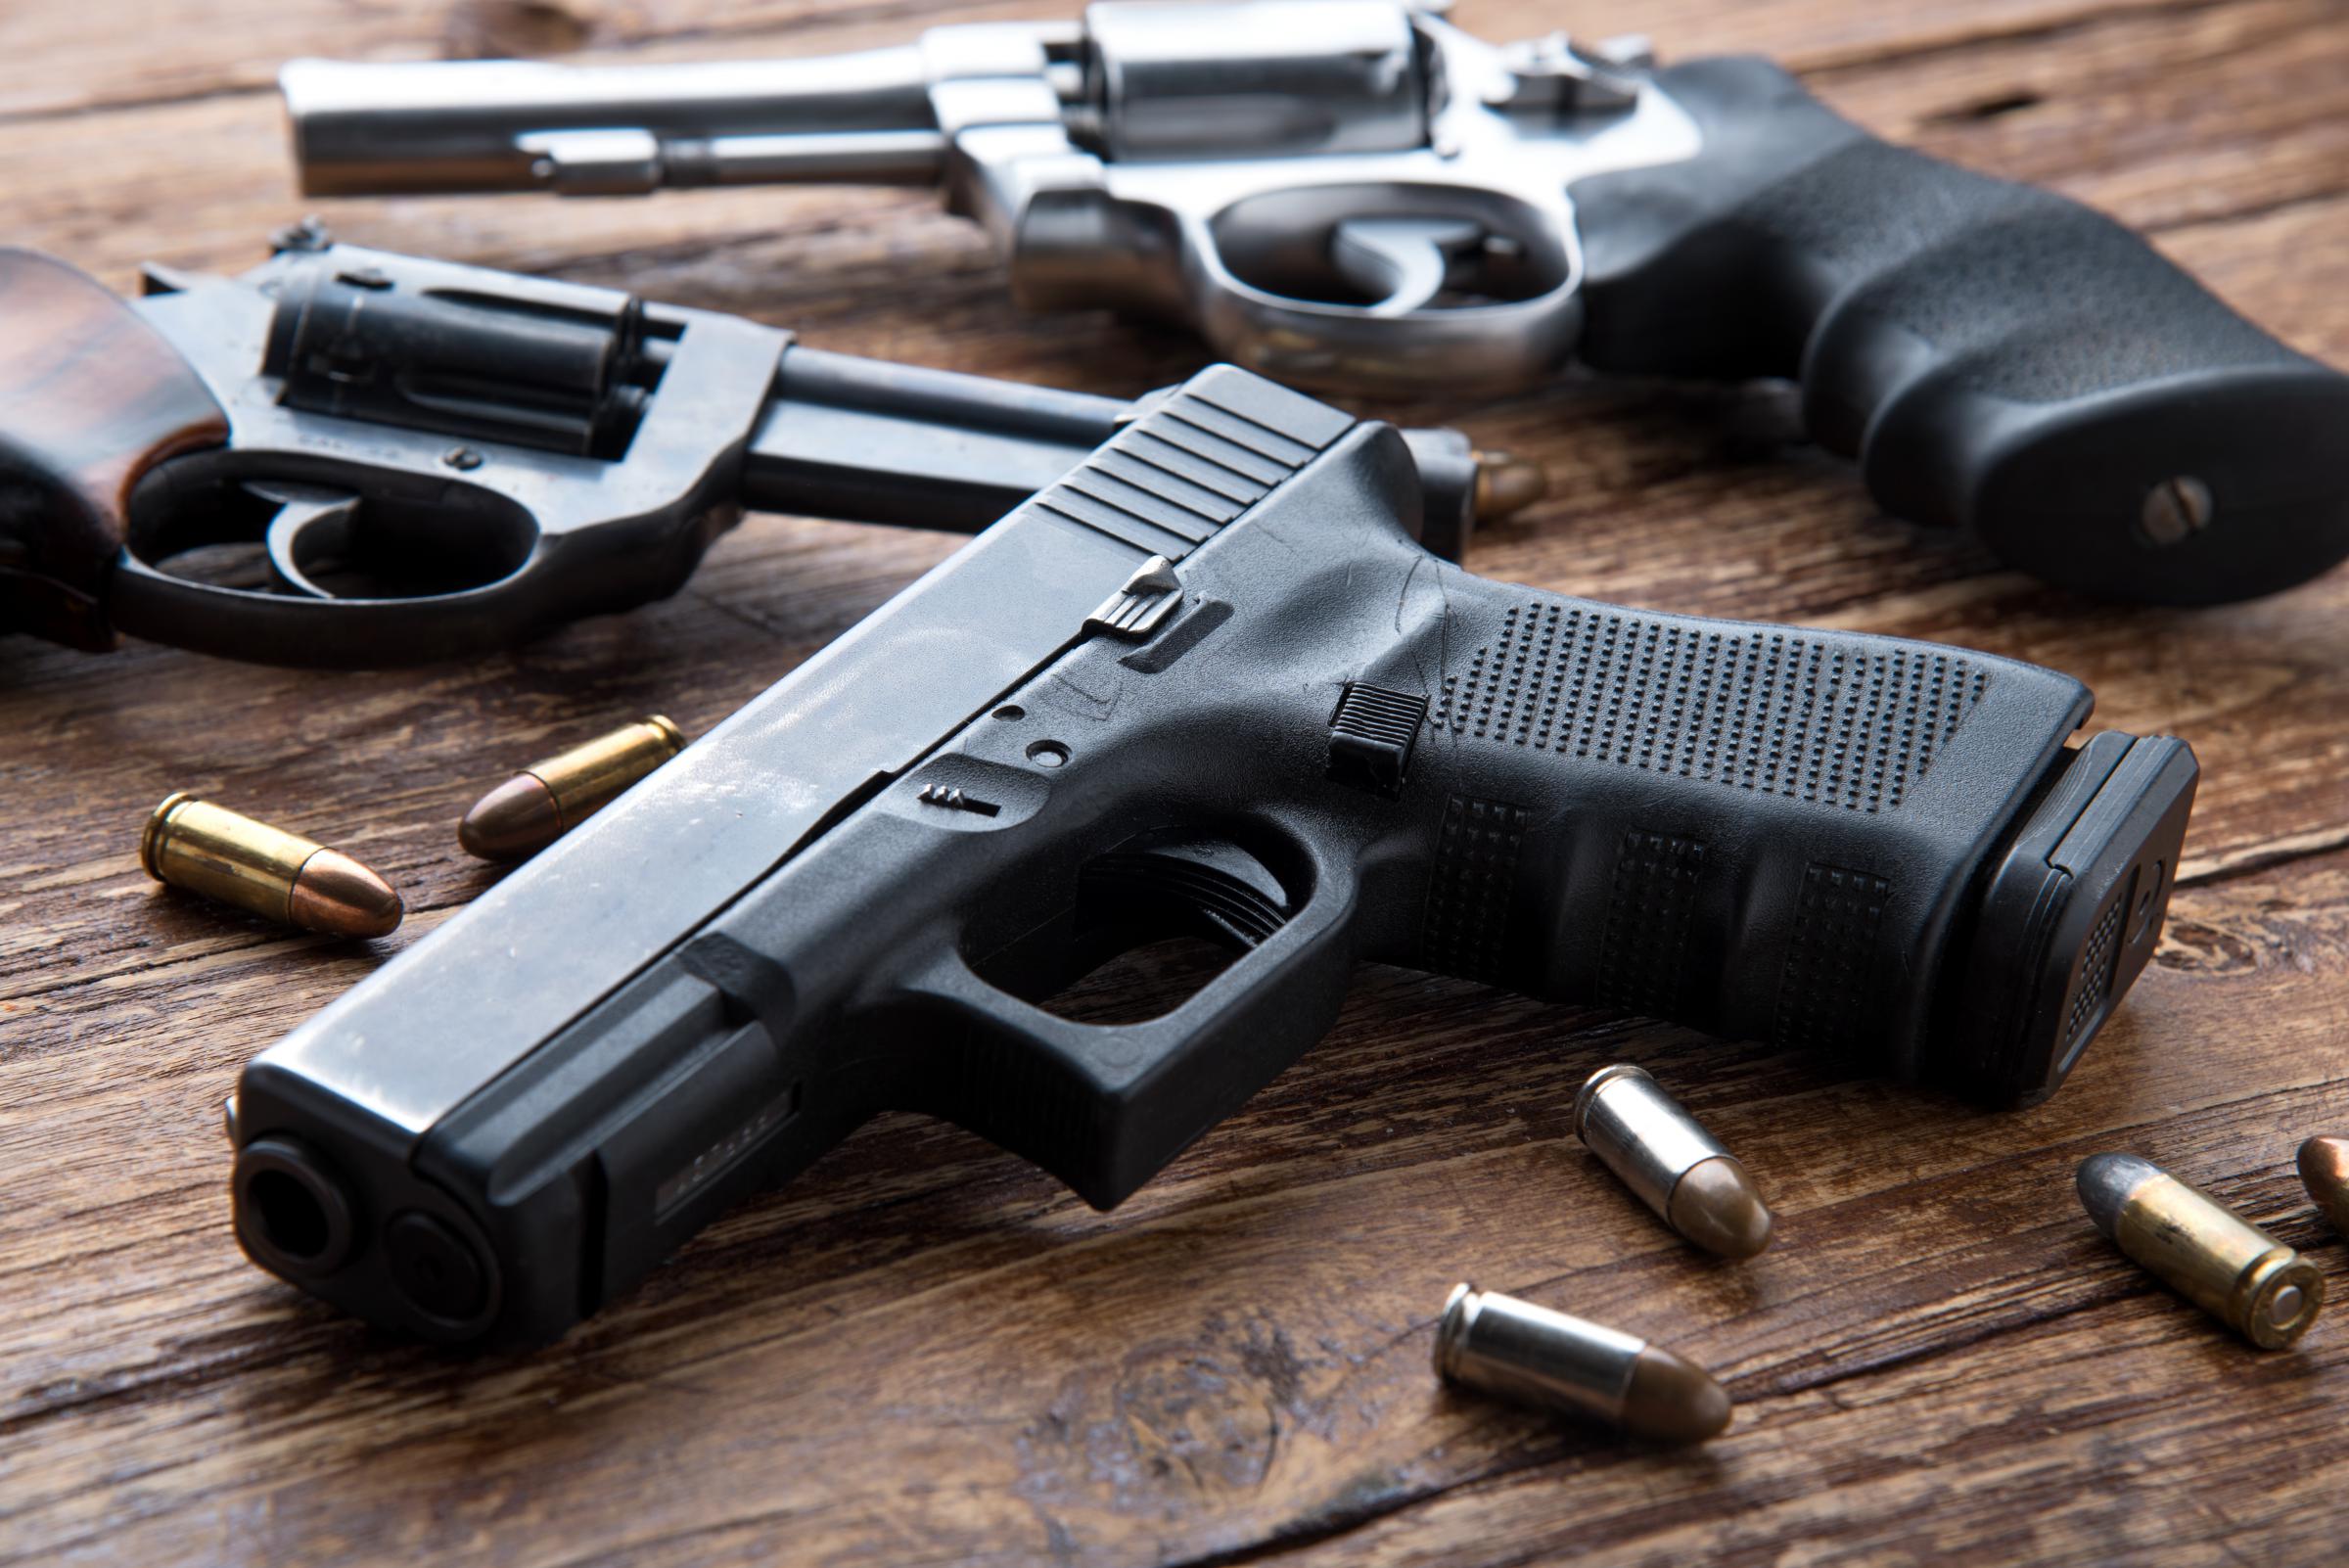 WINNING: HAVING A GUN VISIBLE ISN’T “REASONABLE SUSPICION” PER FLORIDA COURT SAYS